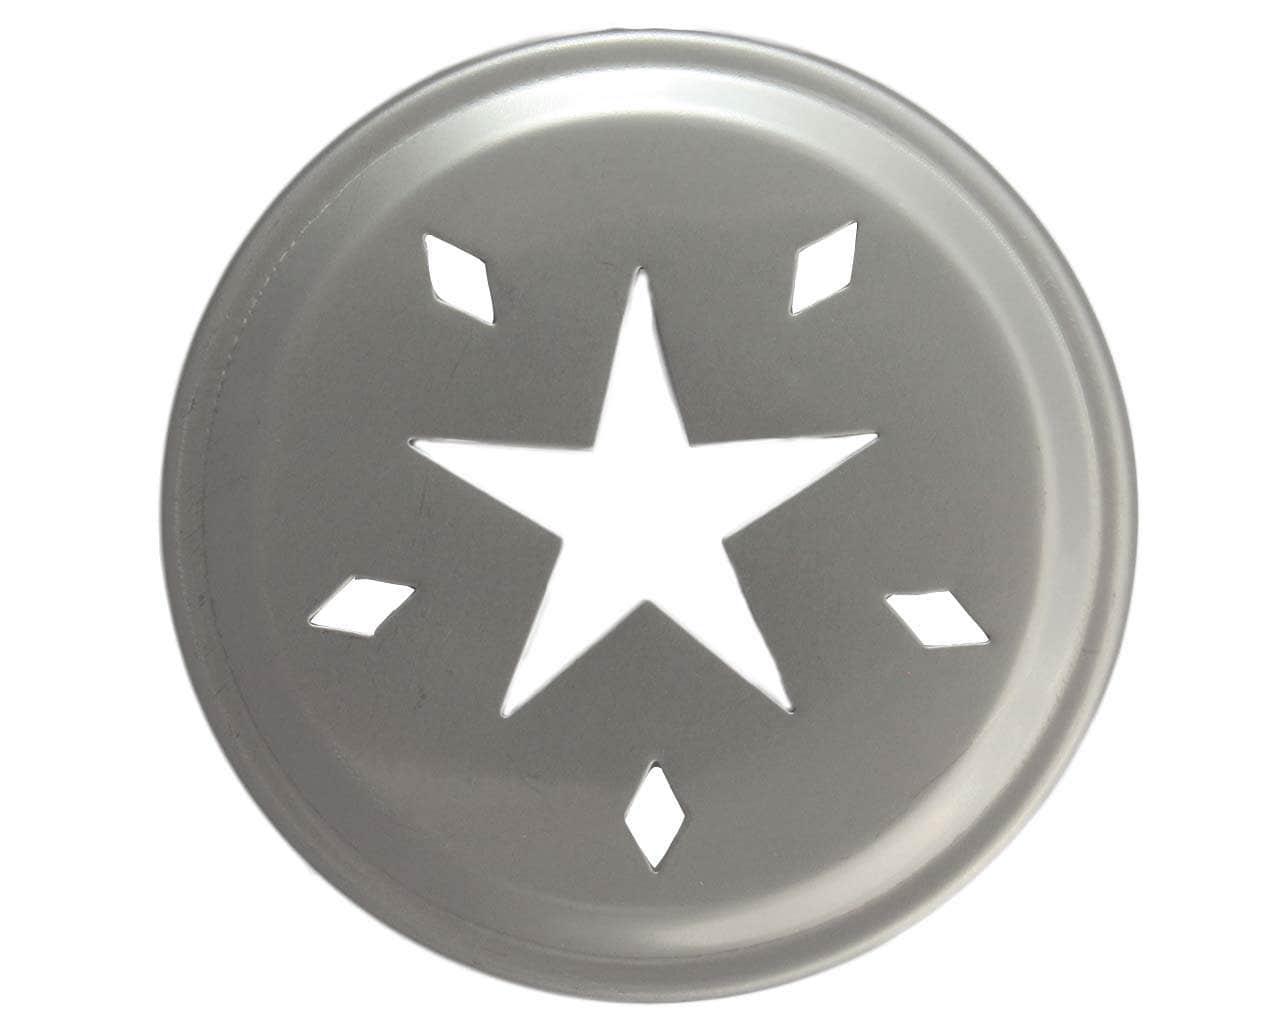 Stainless steel star cut lid insert for regular mouth Mason jars